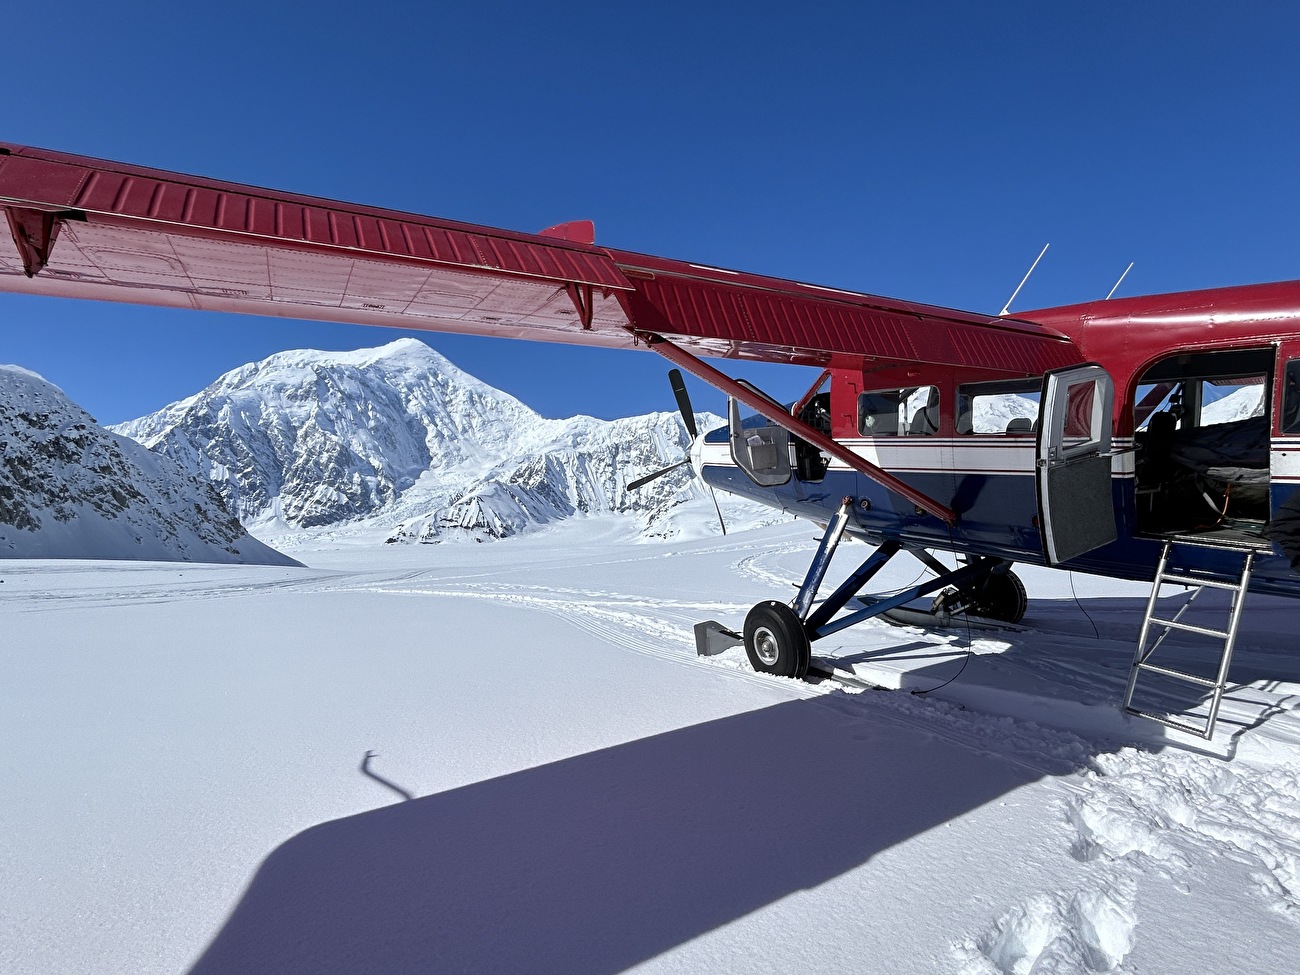 Mt. Charles Alaska, Fred Caloggero, Joseph Hobby - Talkeetna Air Taxi et Paul Roderick débarquent dans le glacier Yentna, Alaska